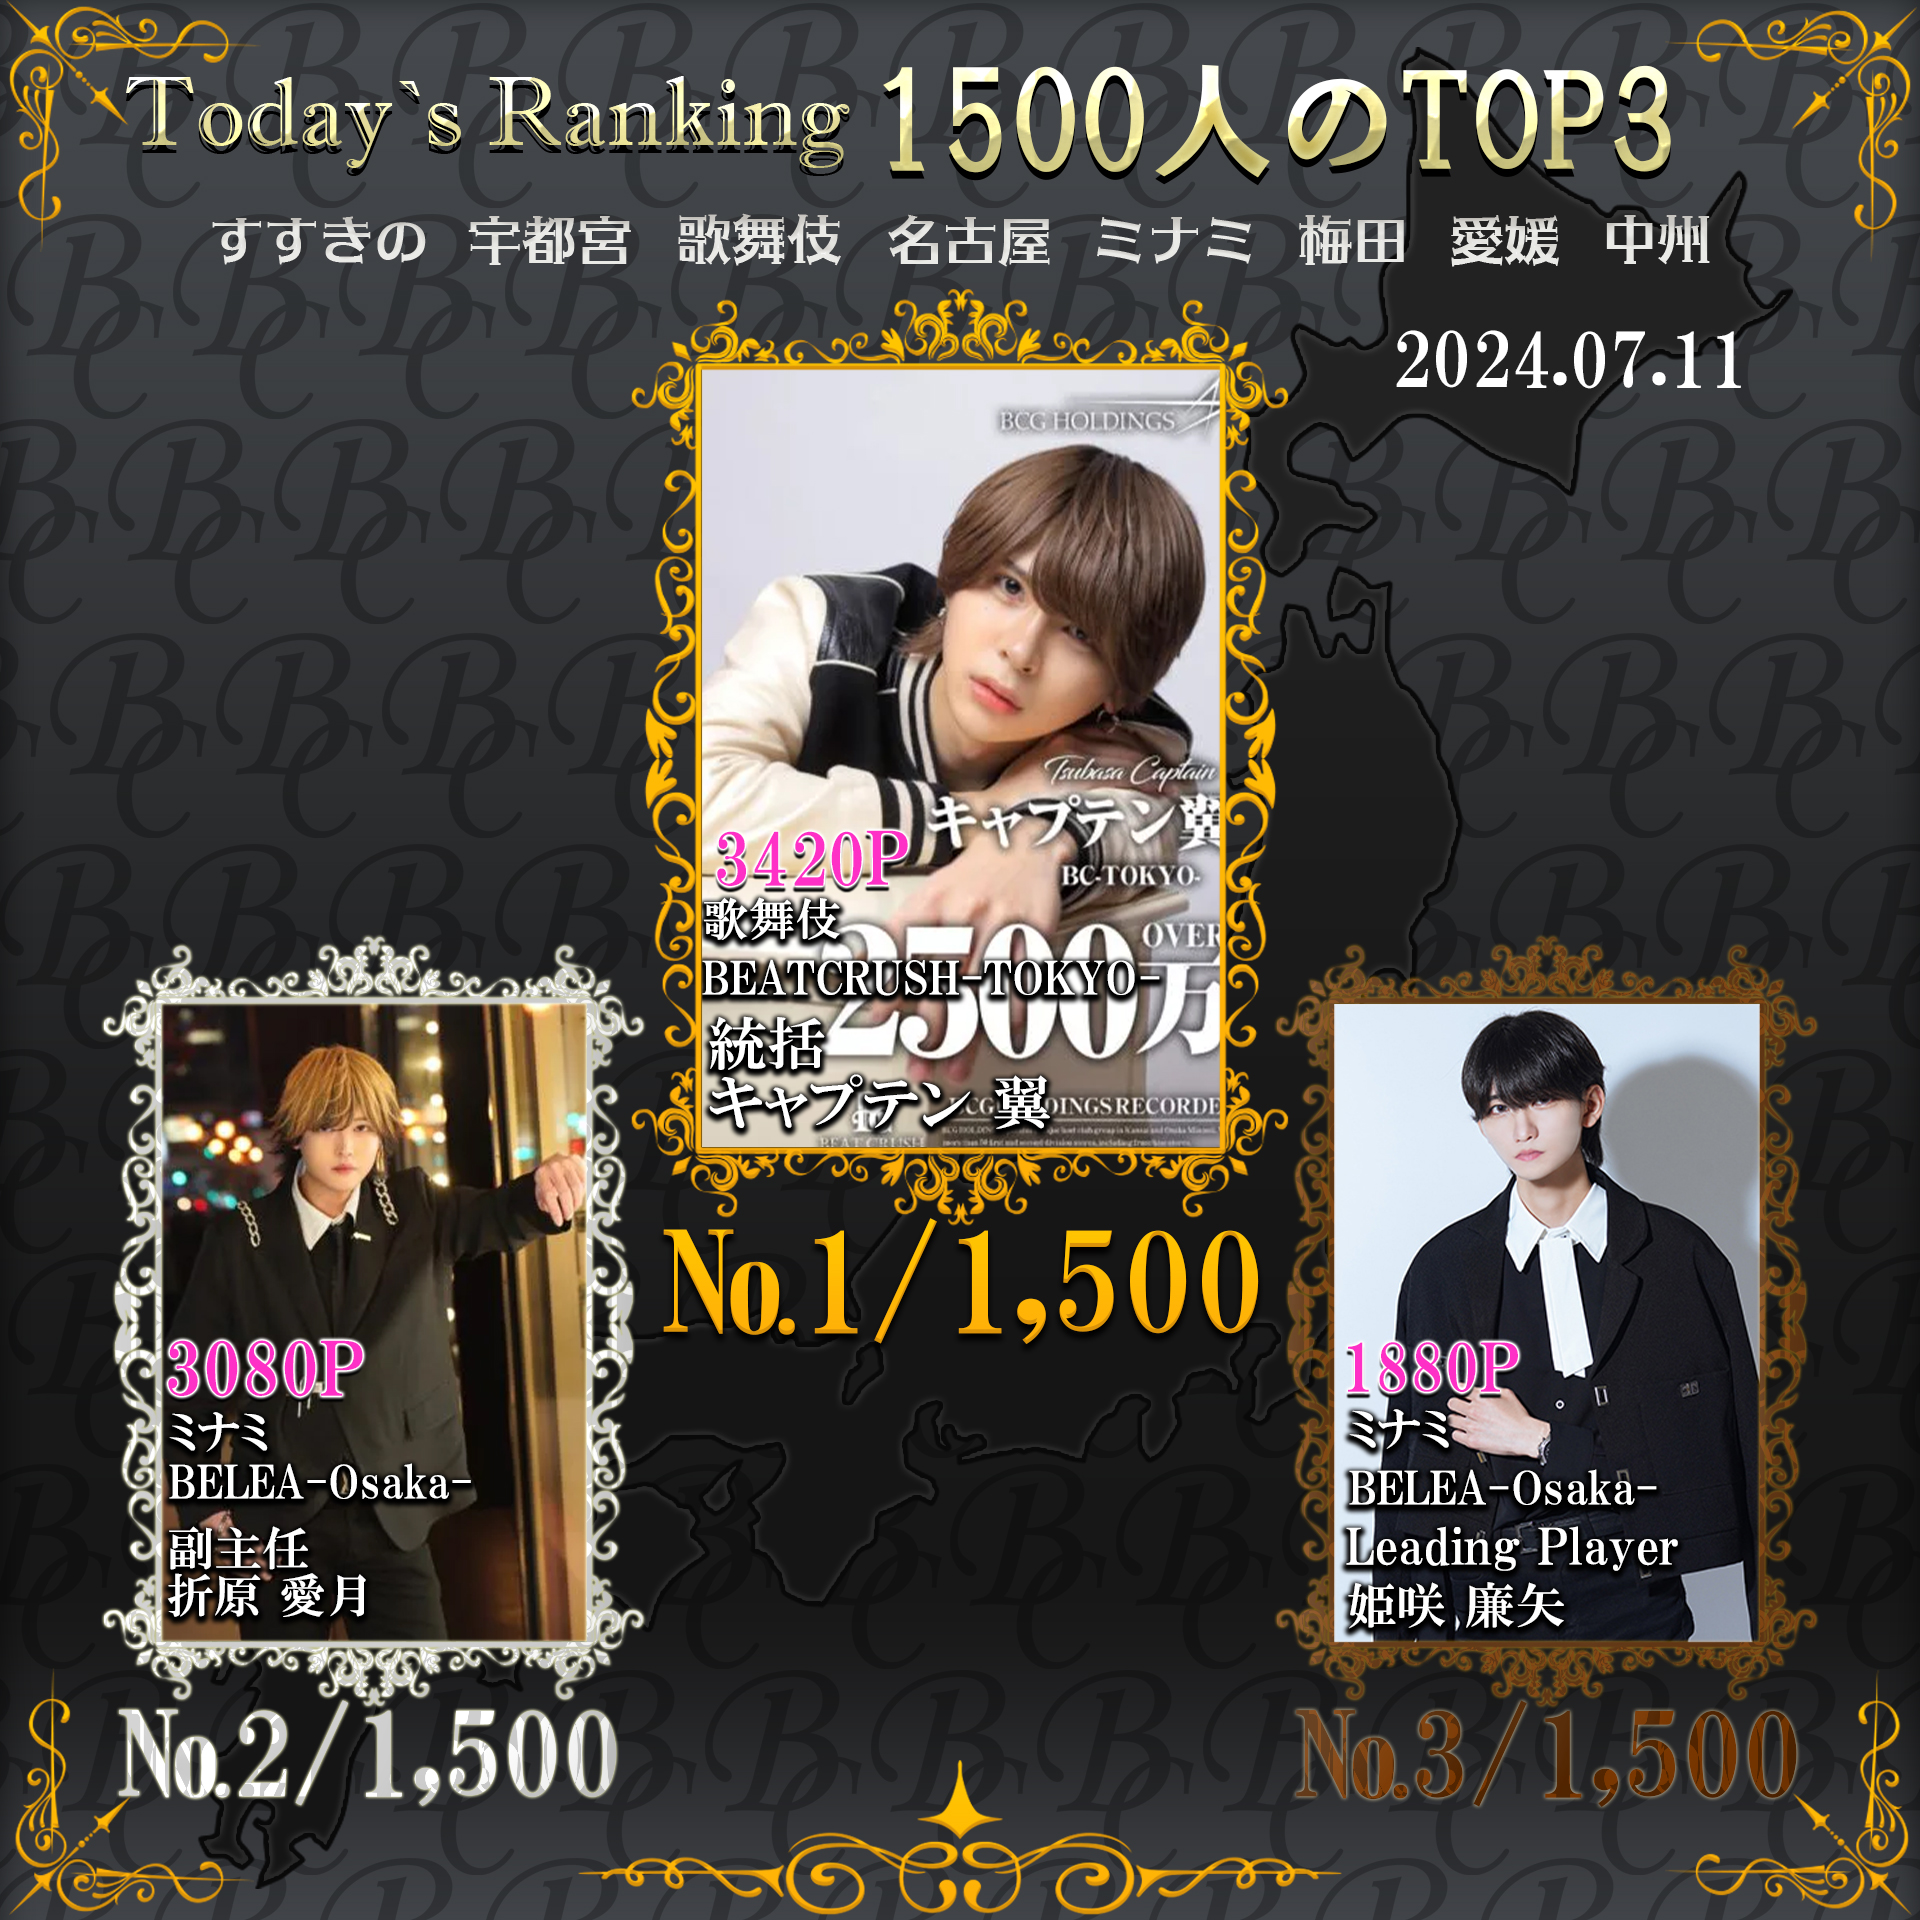 7/11 Today’s Ranking